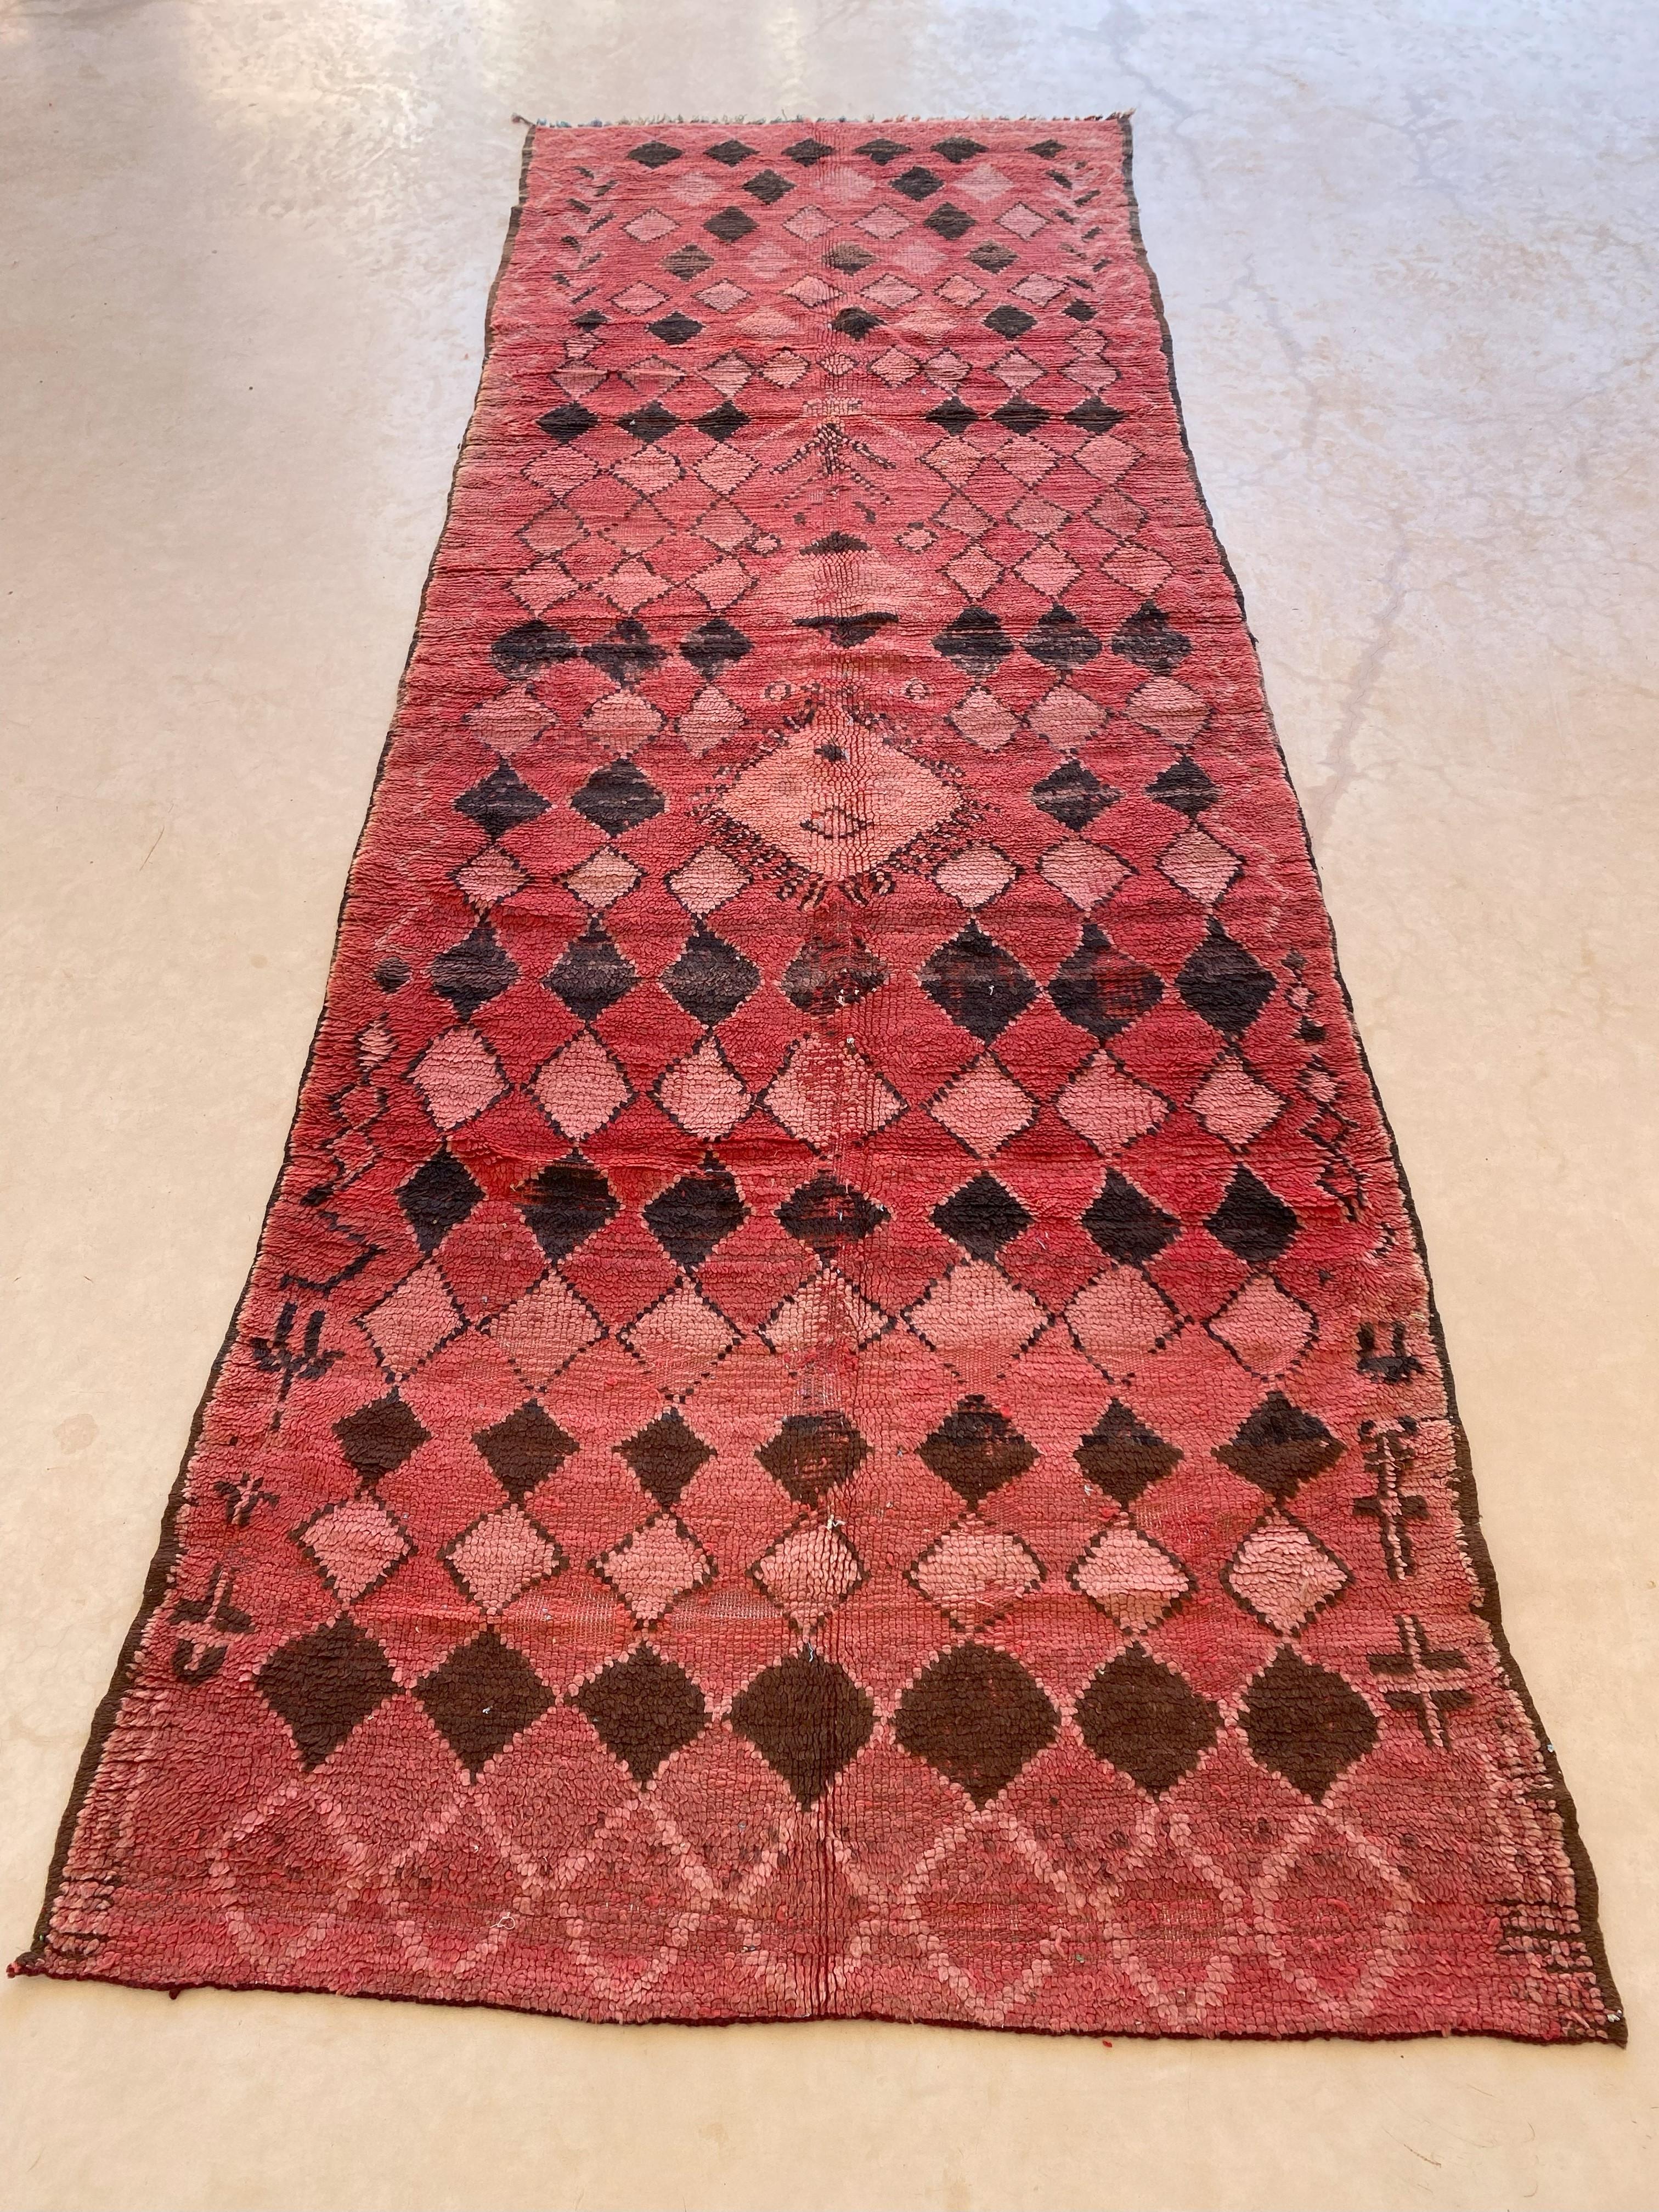 Vintage Moroccan Boujad rug - Red/black/pink - 4.1x11.6feet / 126x354cm For Sale 6